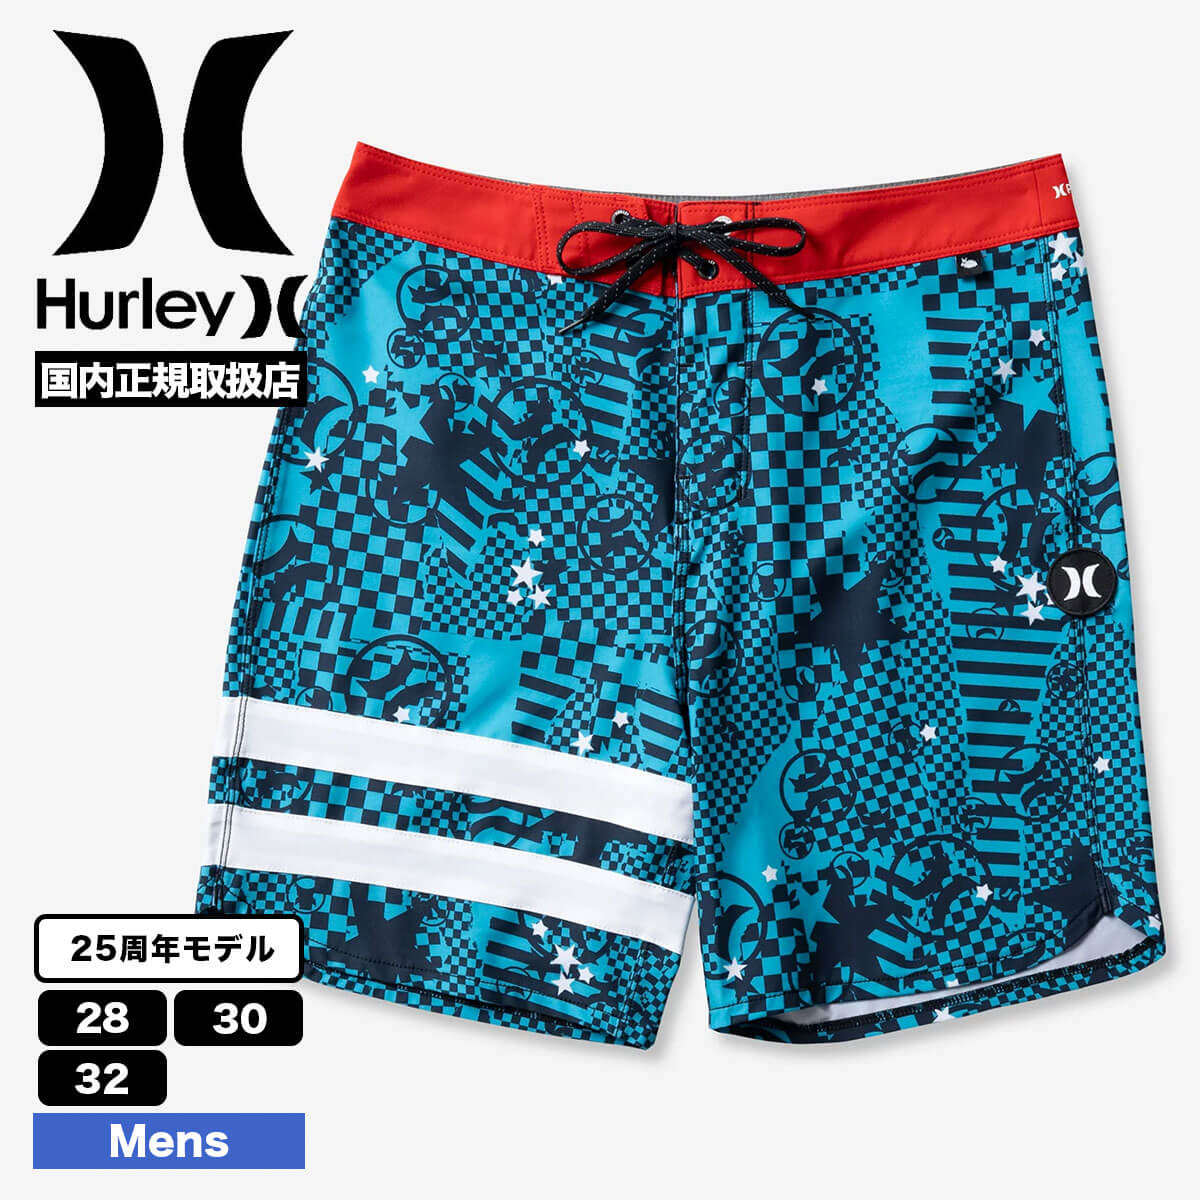 【HURLEY 25周年モデル】ハーレー メンズ 水着 ボードショーツ サーフィン チェック ブラン...